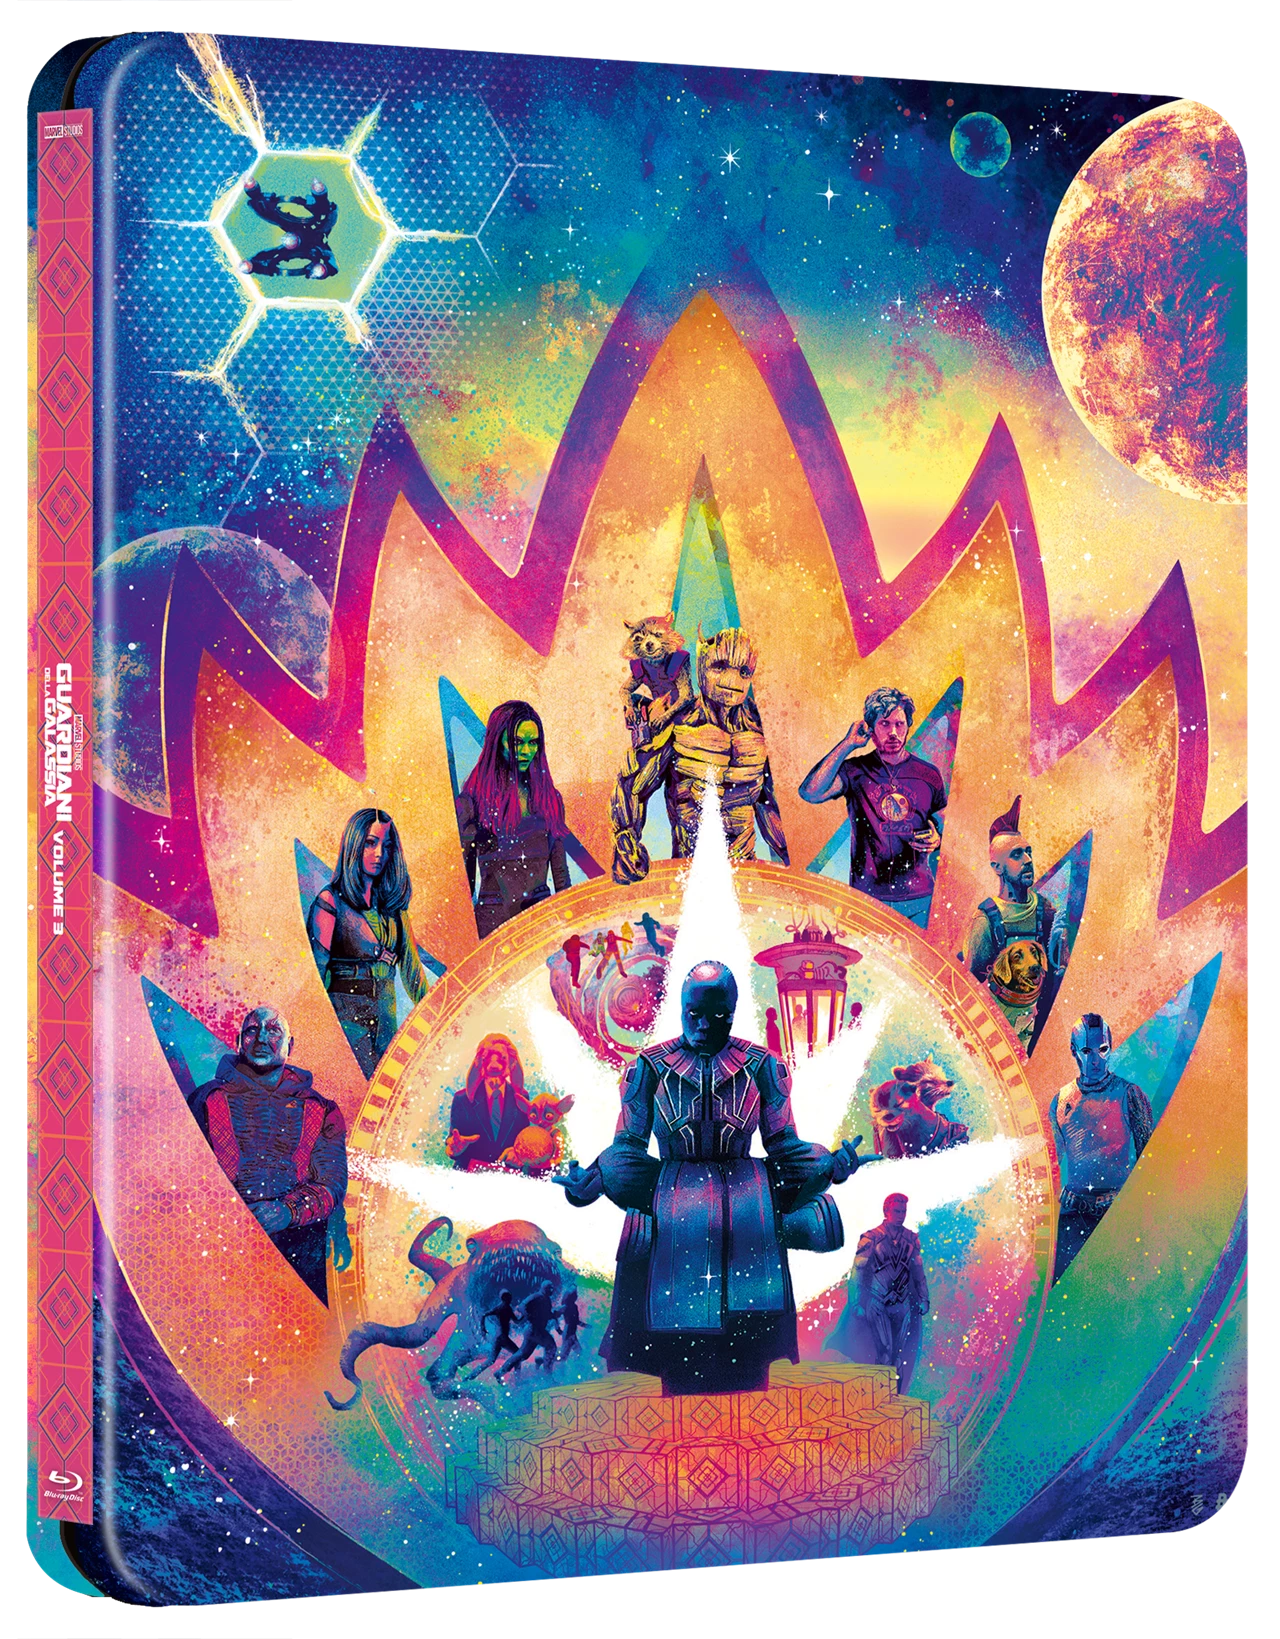 Guardians of the Galaxy: Vol. 3 [Steelbook] [hmv Exclusive] [4K UHD] [UK]